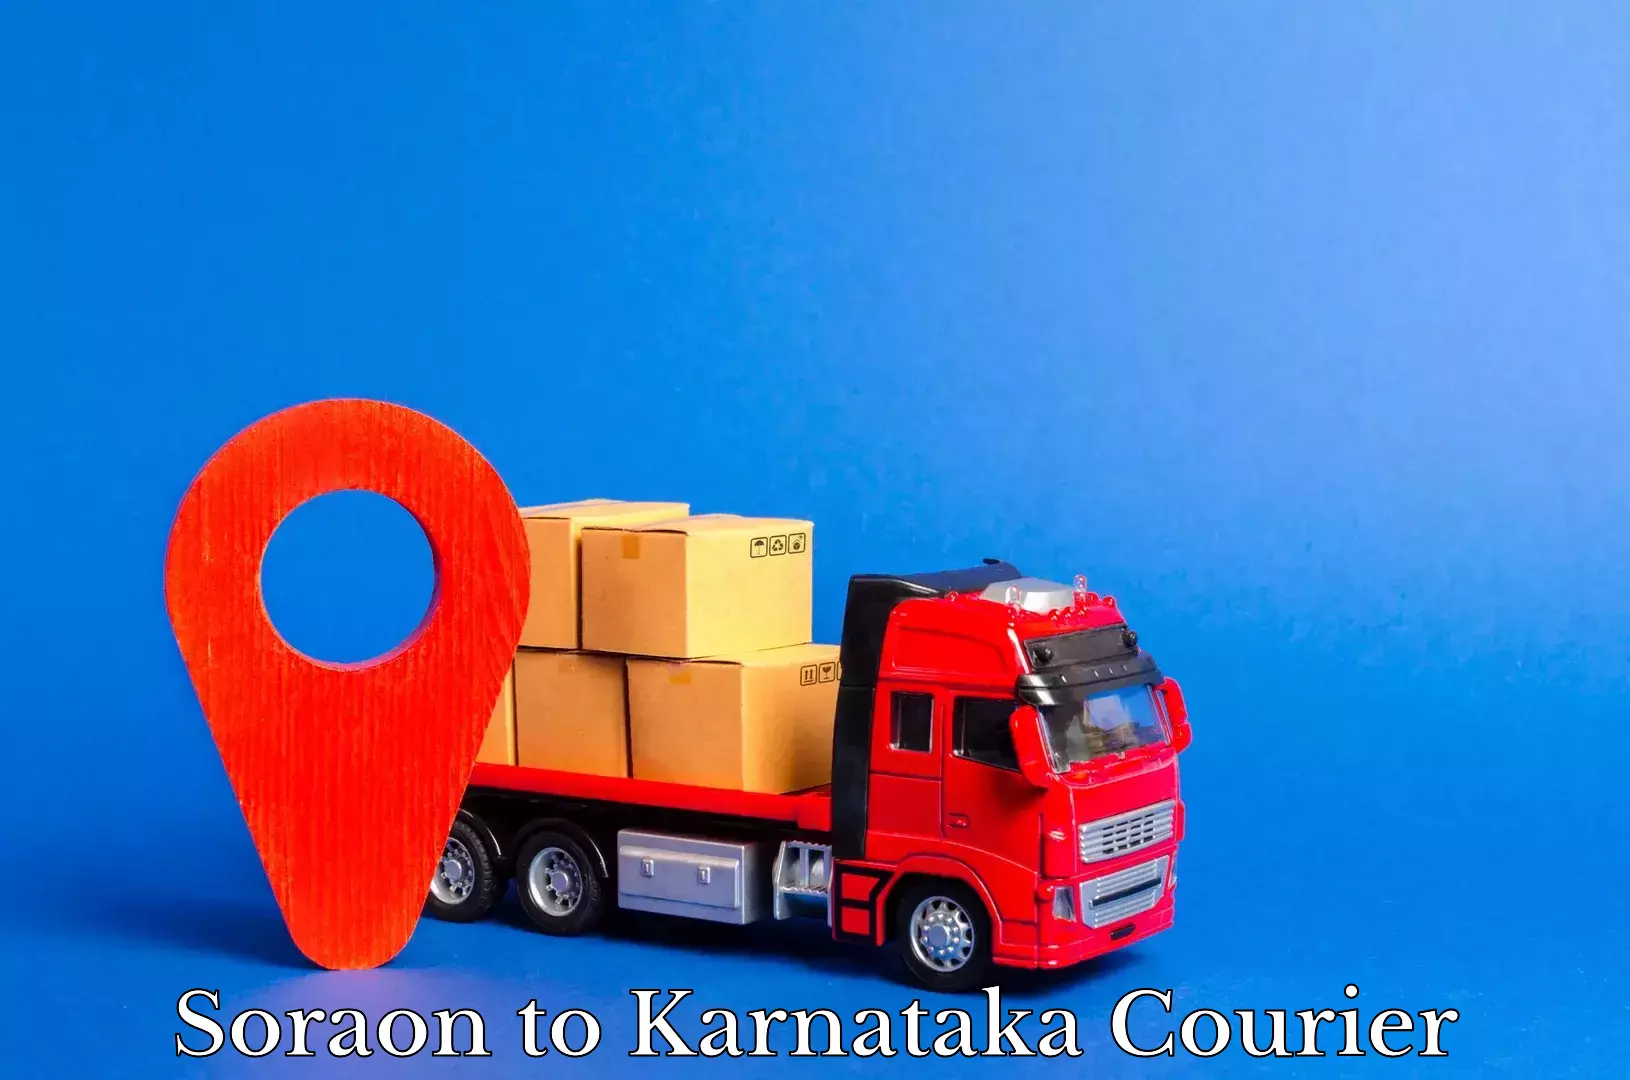 Package delivery network Soraon to Karnataka